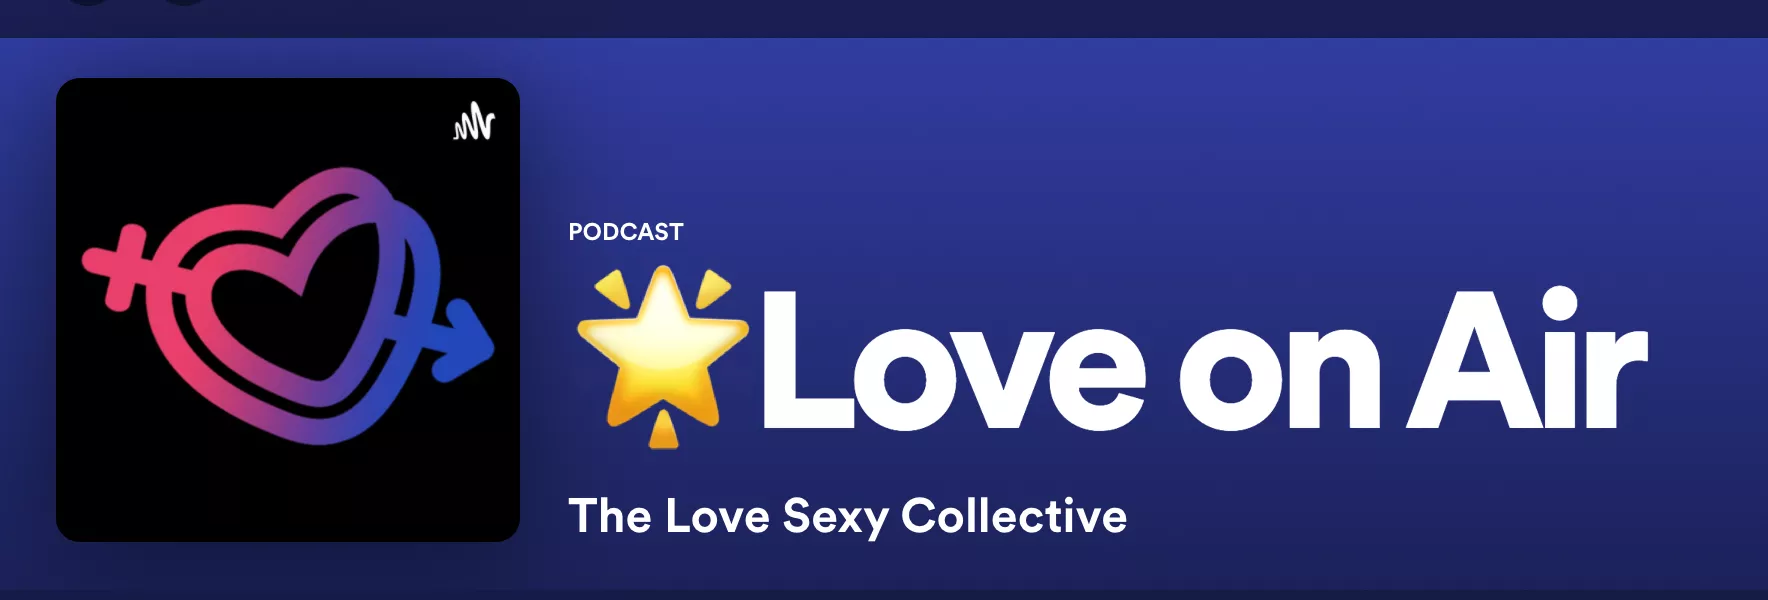 Love on air podcast